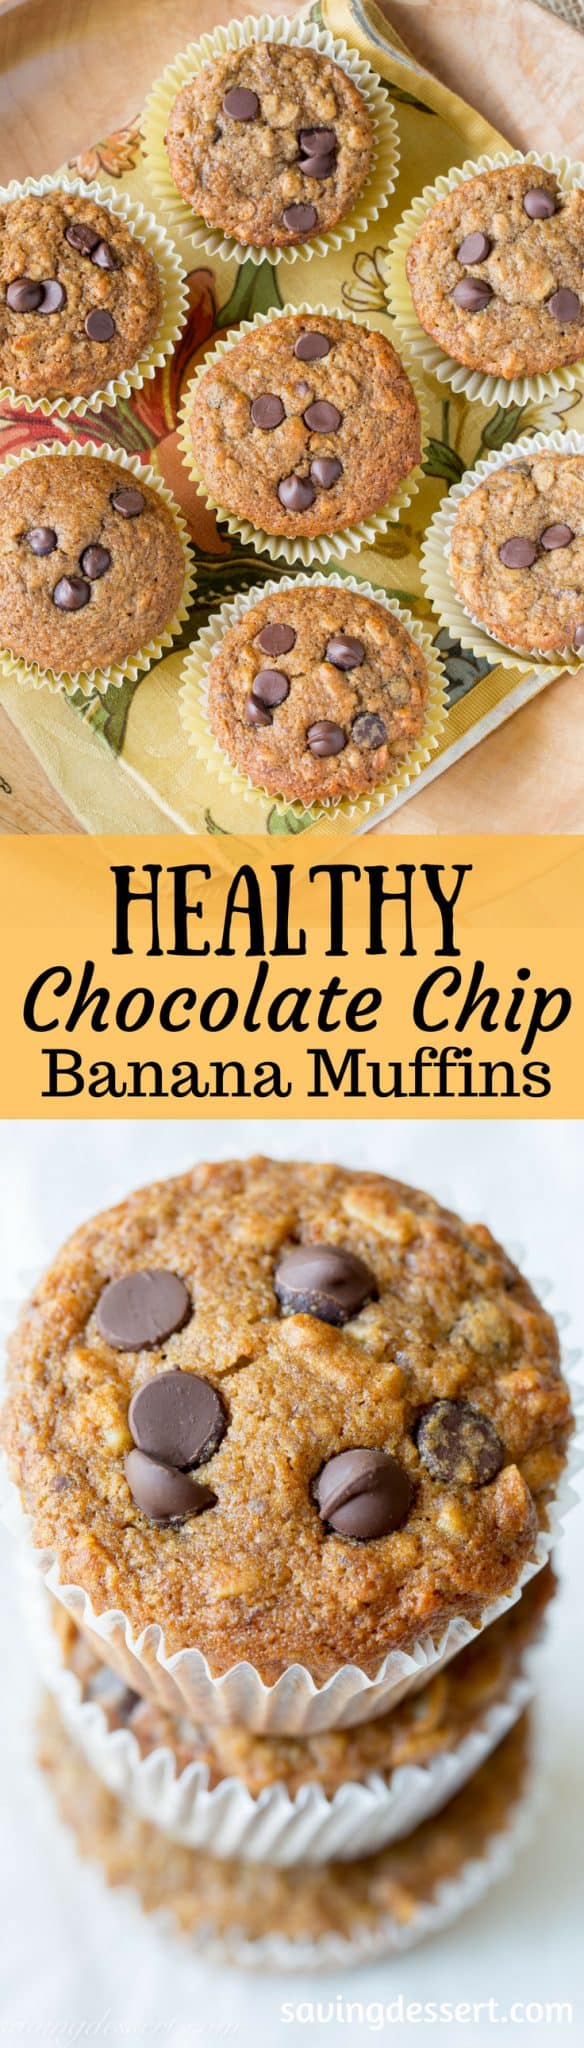 Super Healthy Chocolate Chip Banana Muffin Recipe | www.savingdessert.com